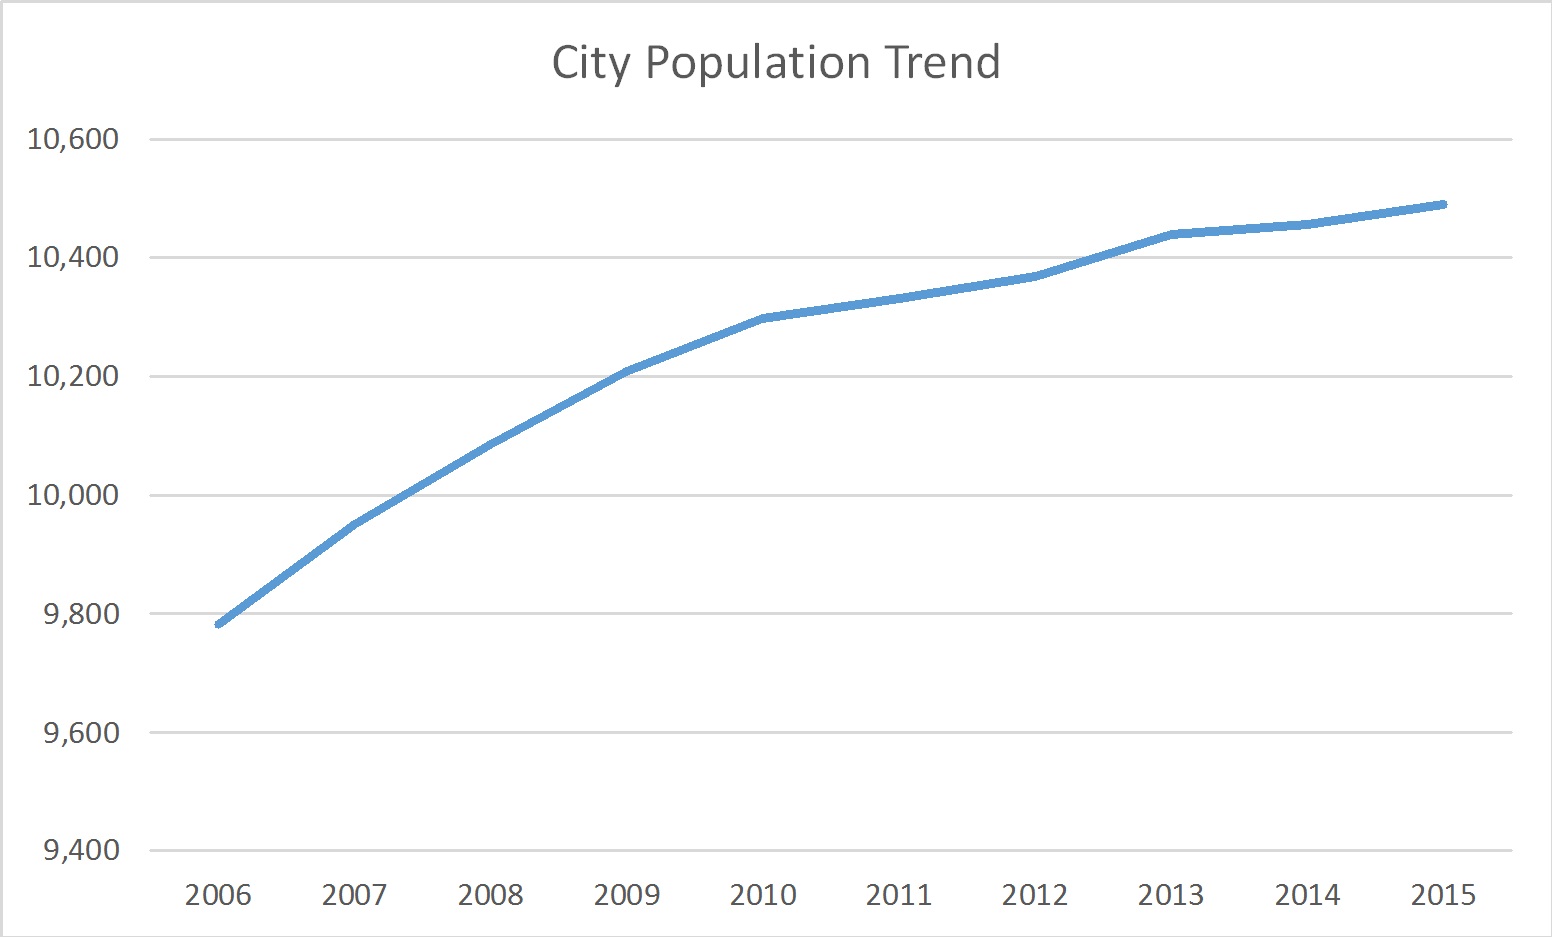 Heath Ohio Population Trend | Russell Roberts Appraisals, Inc.